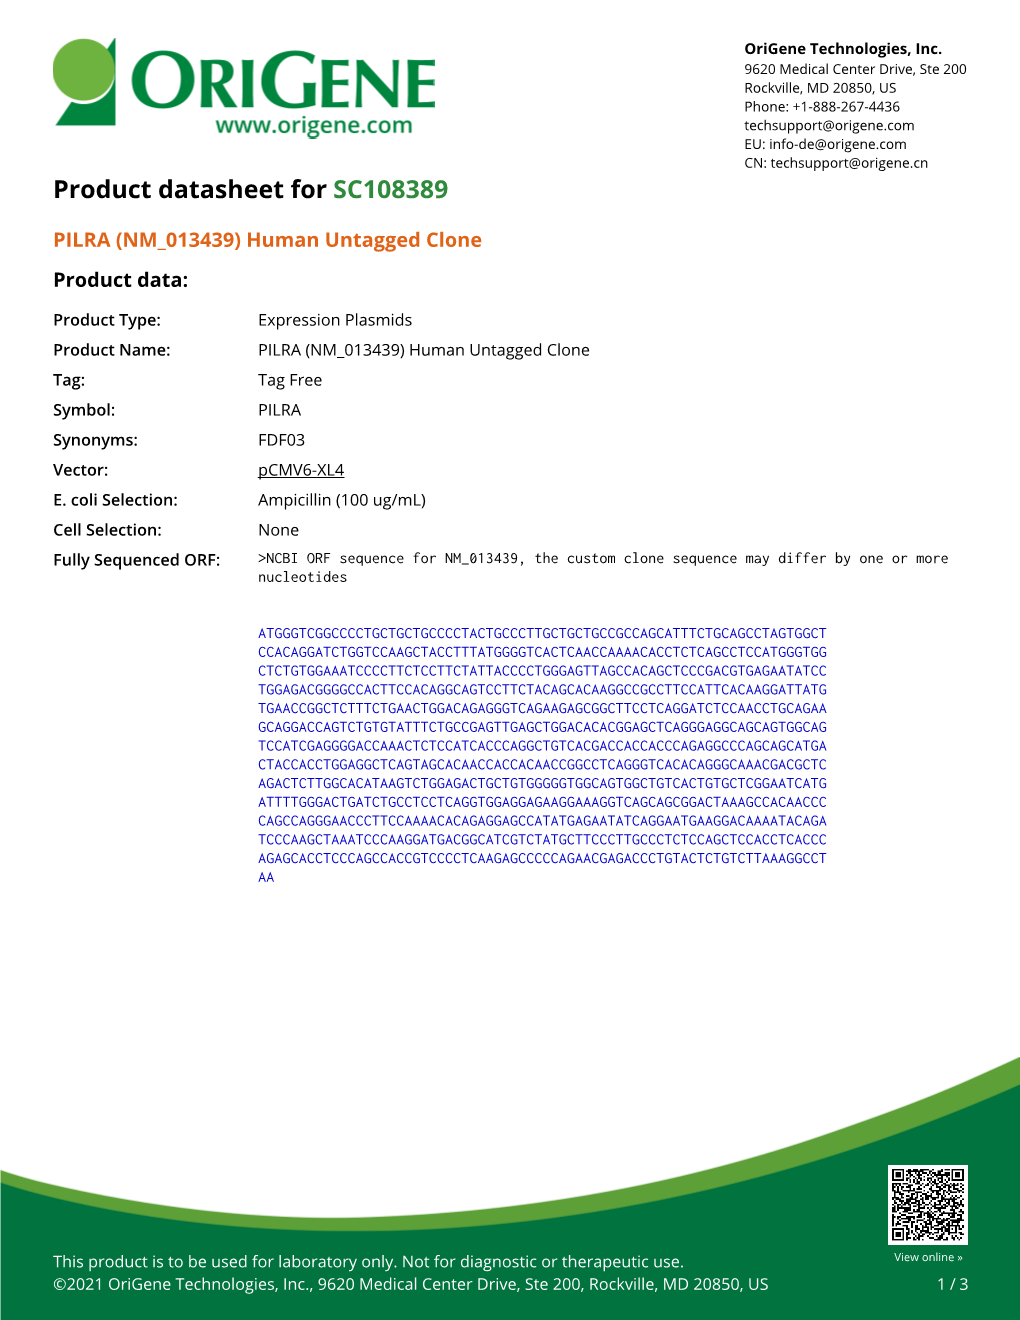 PILRA (NM 013439) Human Untagged Clone Product Data